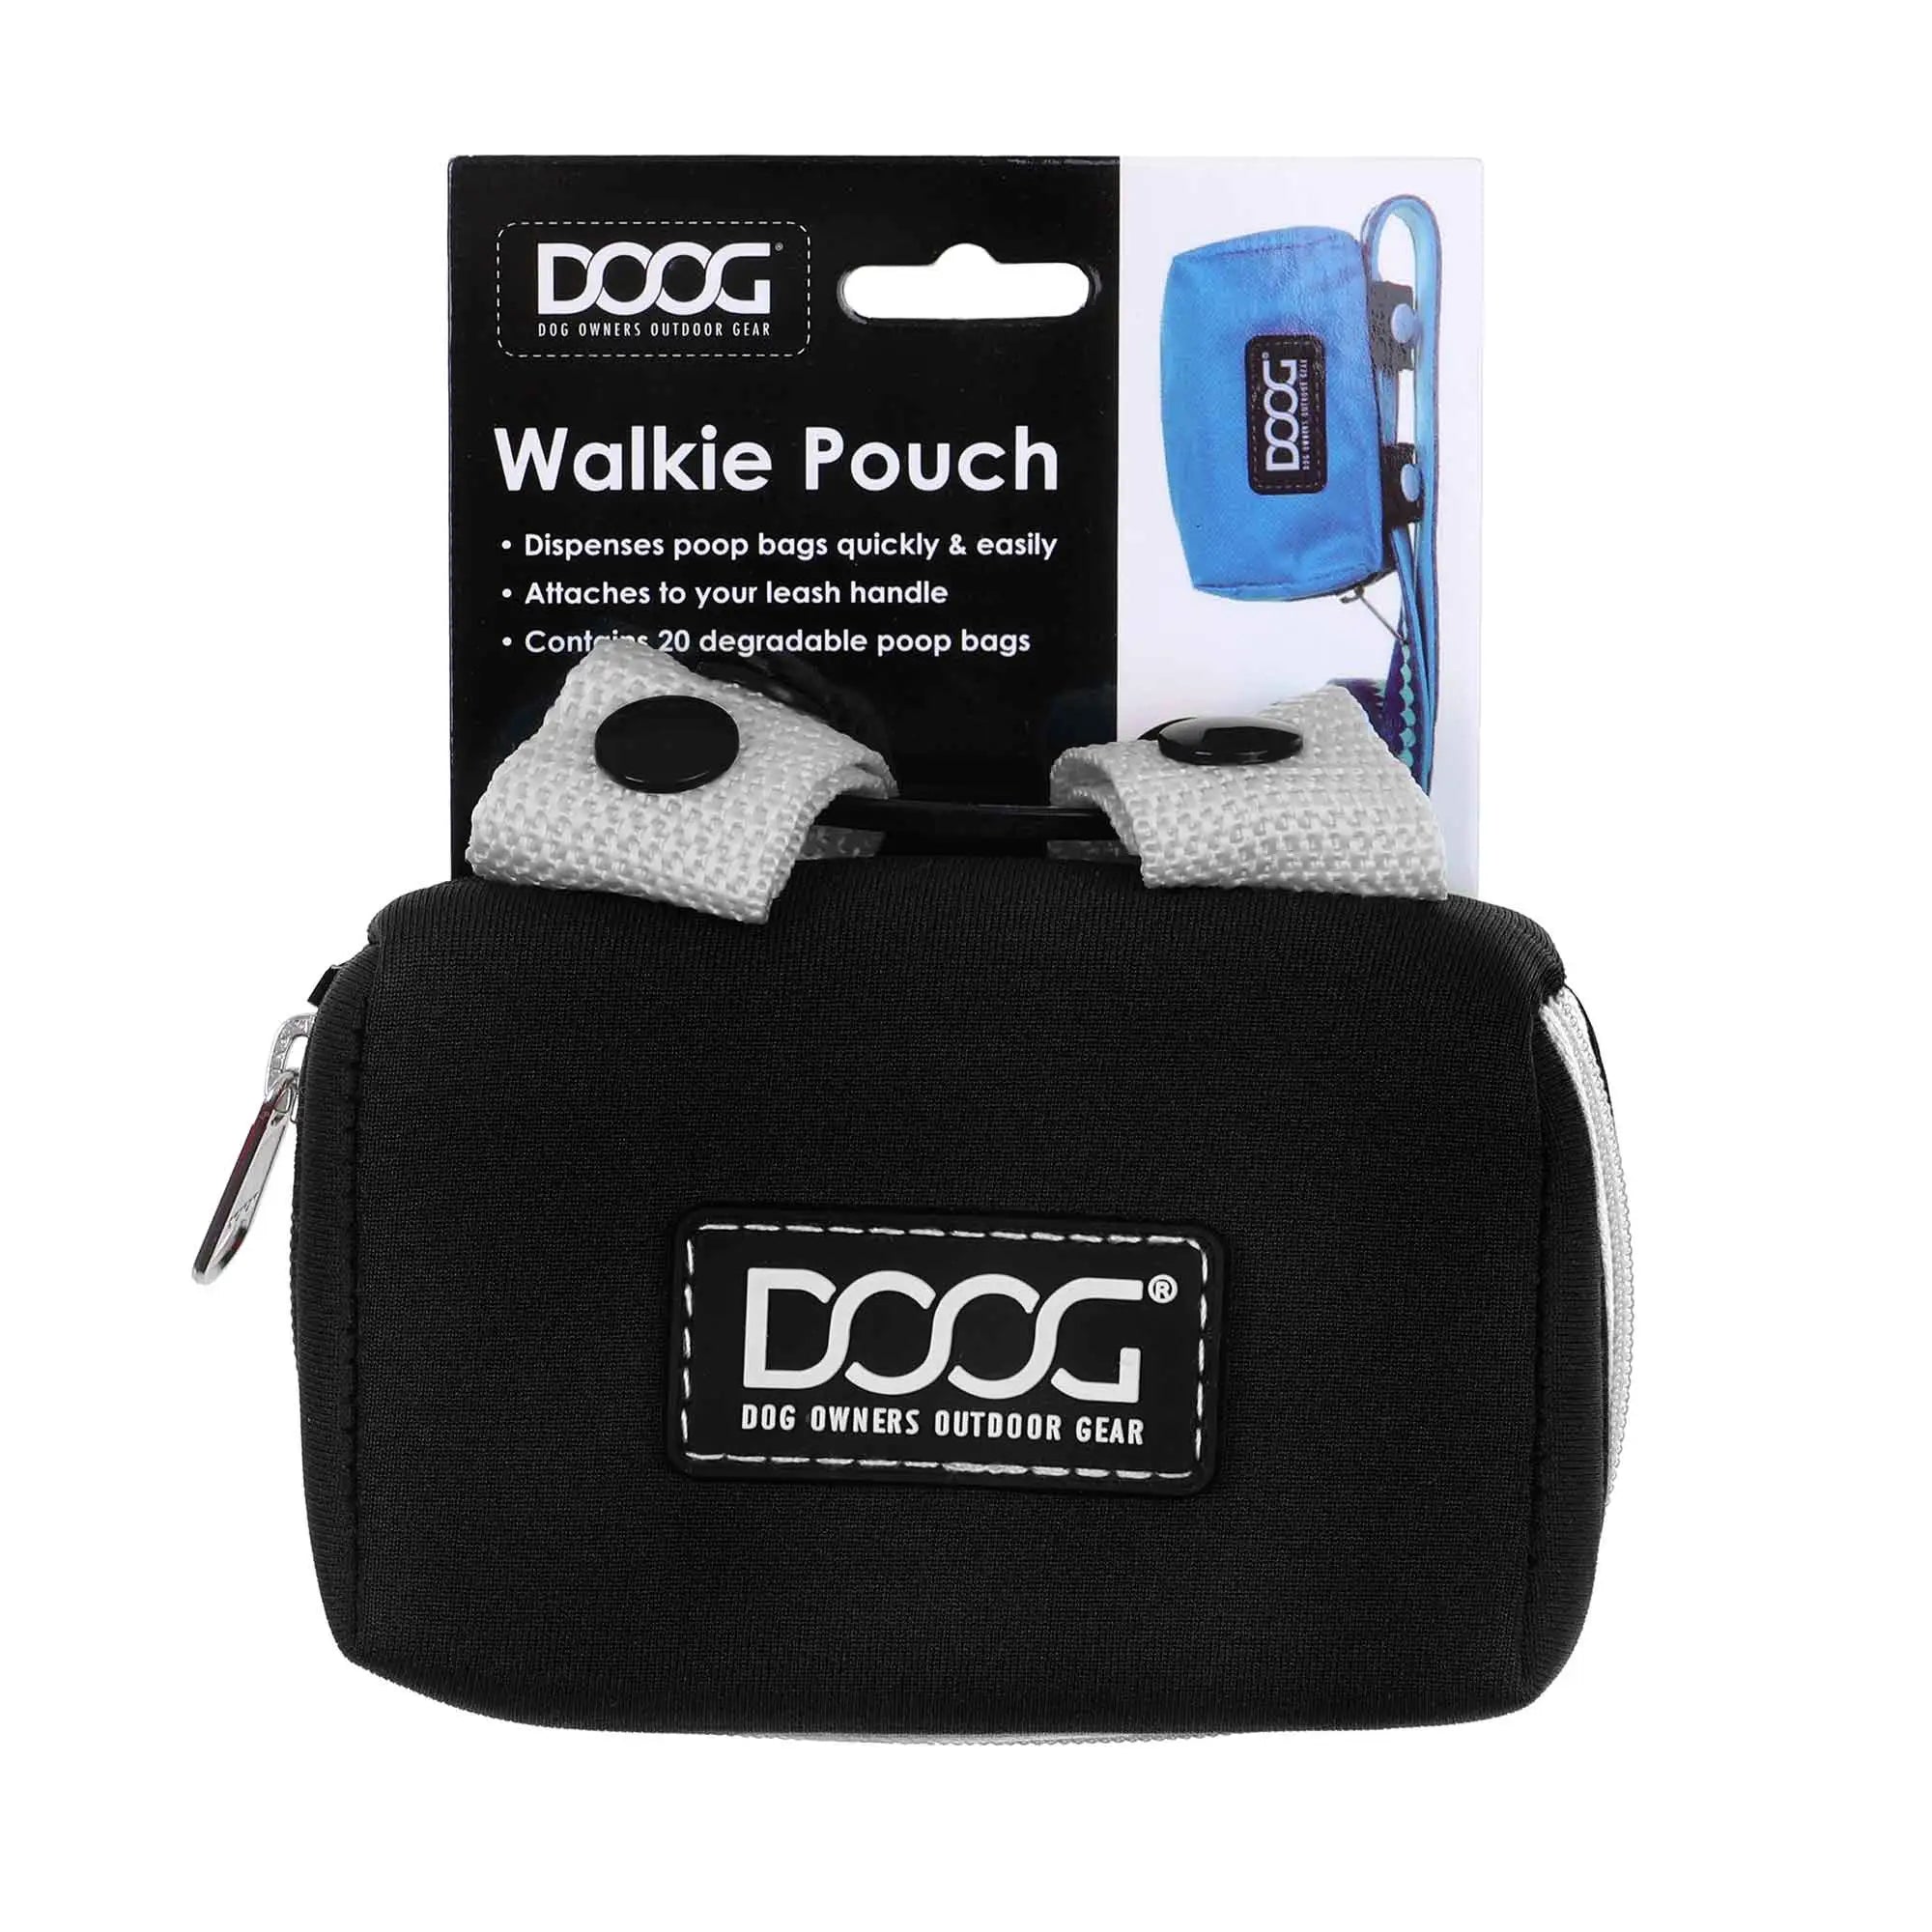 DOOG Walkie Pouch Black 4.73" x 1.58" x 3.94"